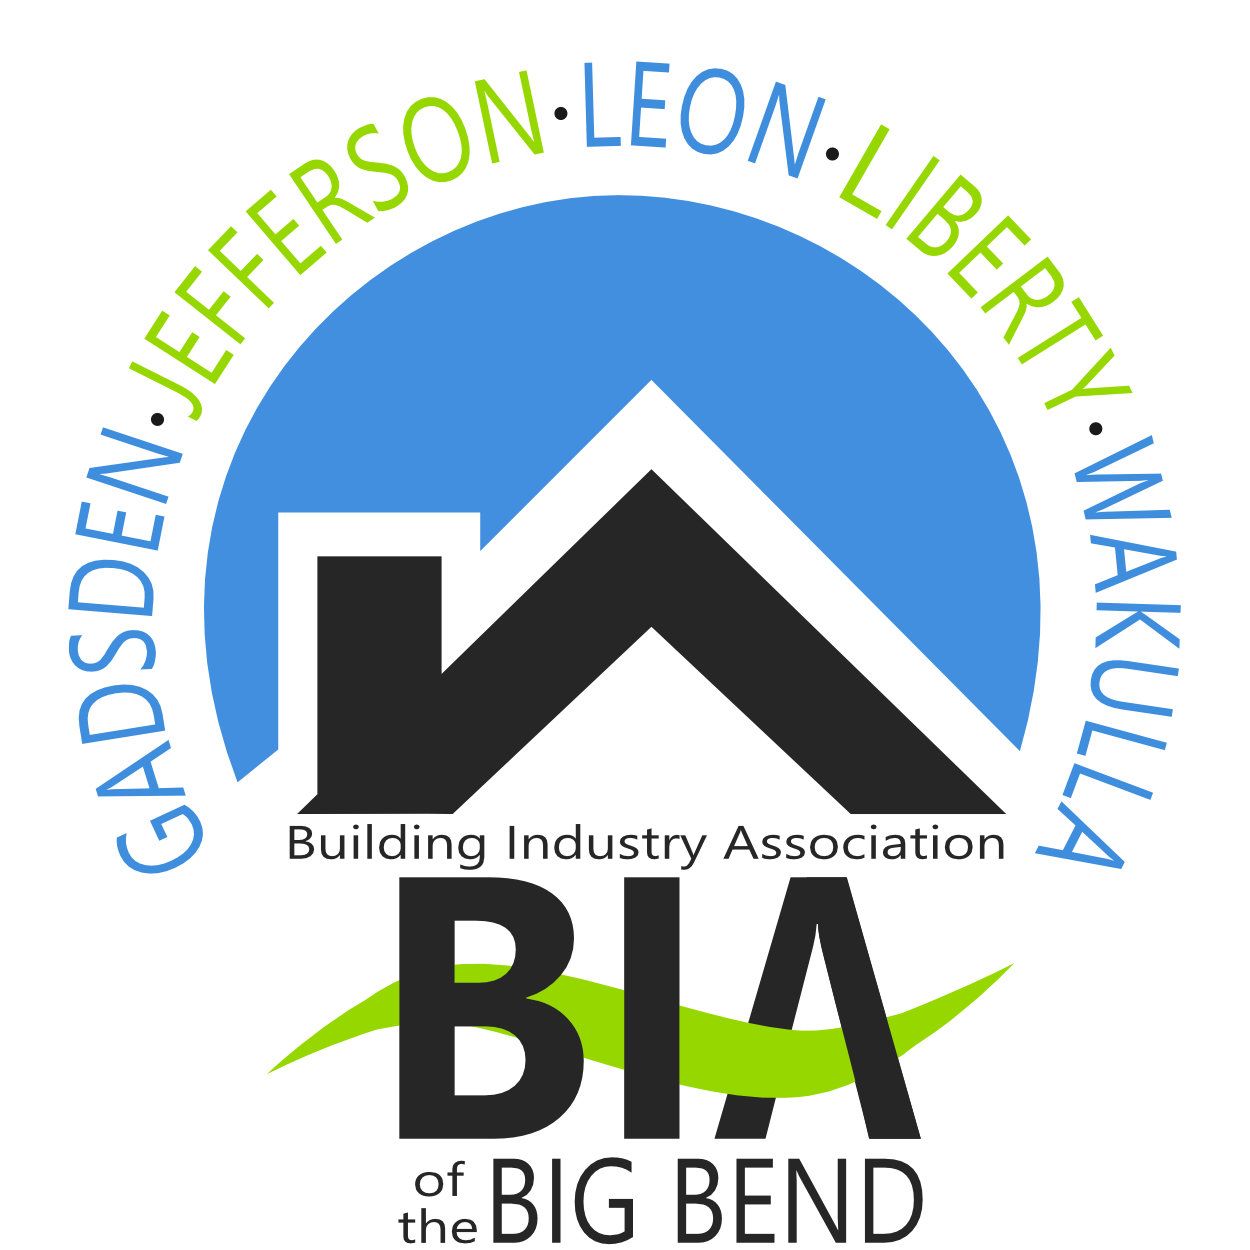 Building Industry Association of the Big Bend logo.